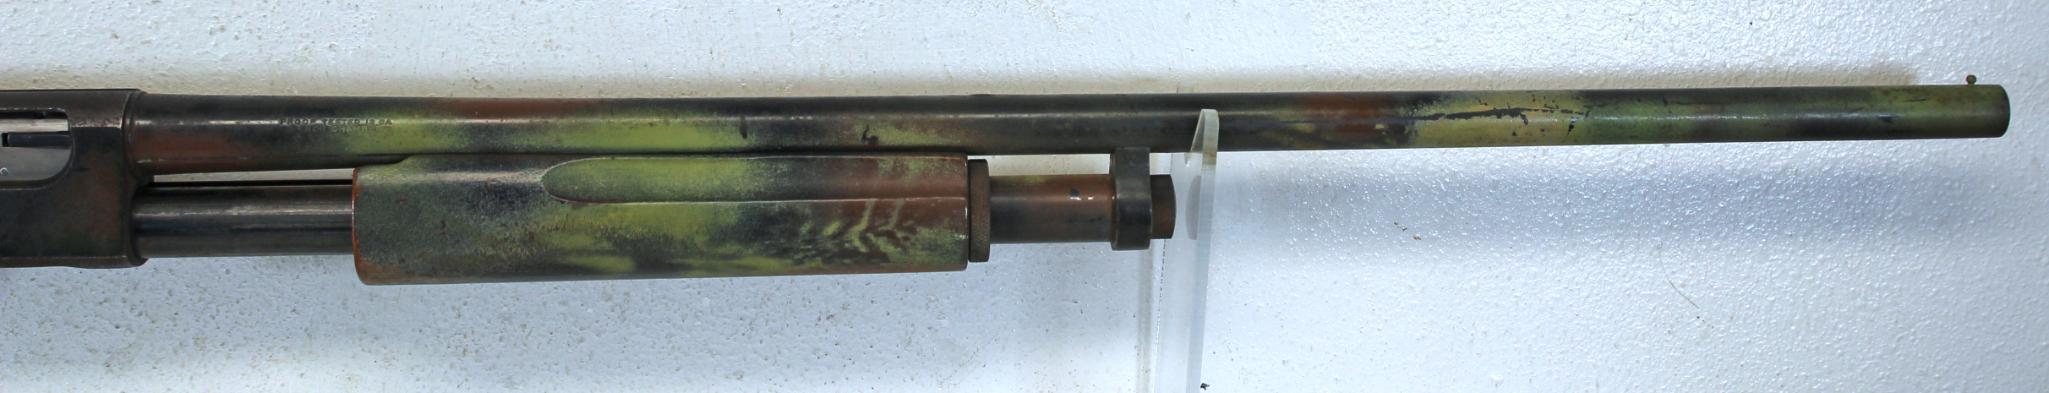 S&W Eastfield Model 916 12 Ga. Pump Action Shotgun 3" Chamber... 28" Plain Barrel... Hand Painted